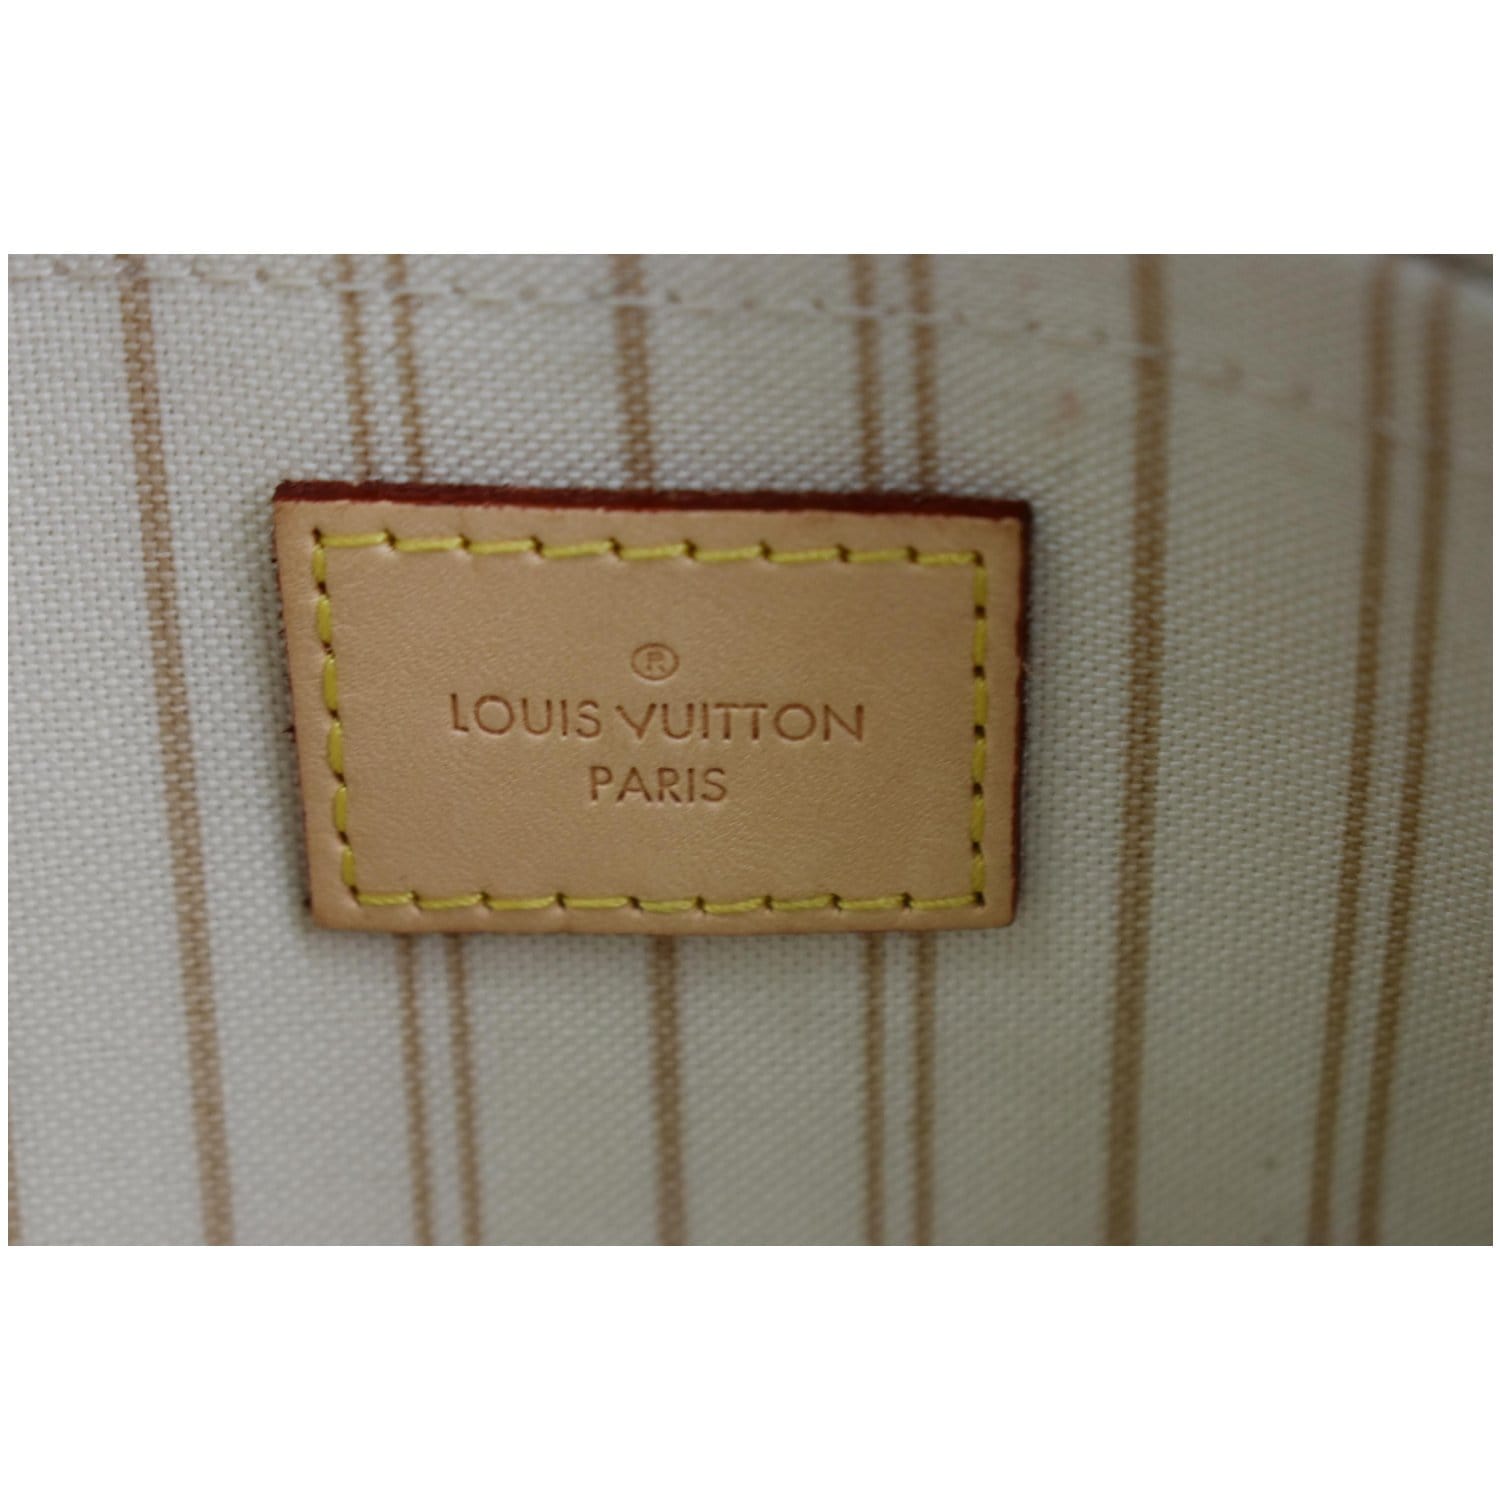 Epi - LOUIS VUITTON Neverfull Damier Azur Pochette Wristlet Pouch White -  M63489 - Vuitton - 2 - and - Used - Authentic - R20079 - Agenda -  ep_vintage luxury Store - Louis - Set - of - F/S – dct - Wallet